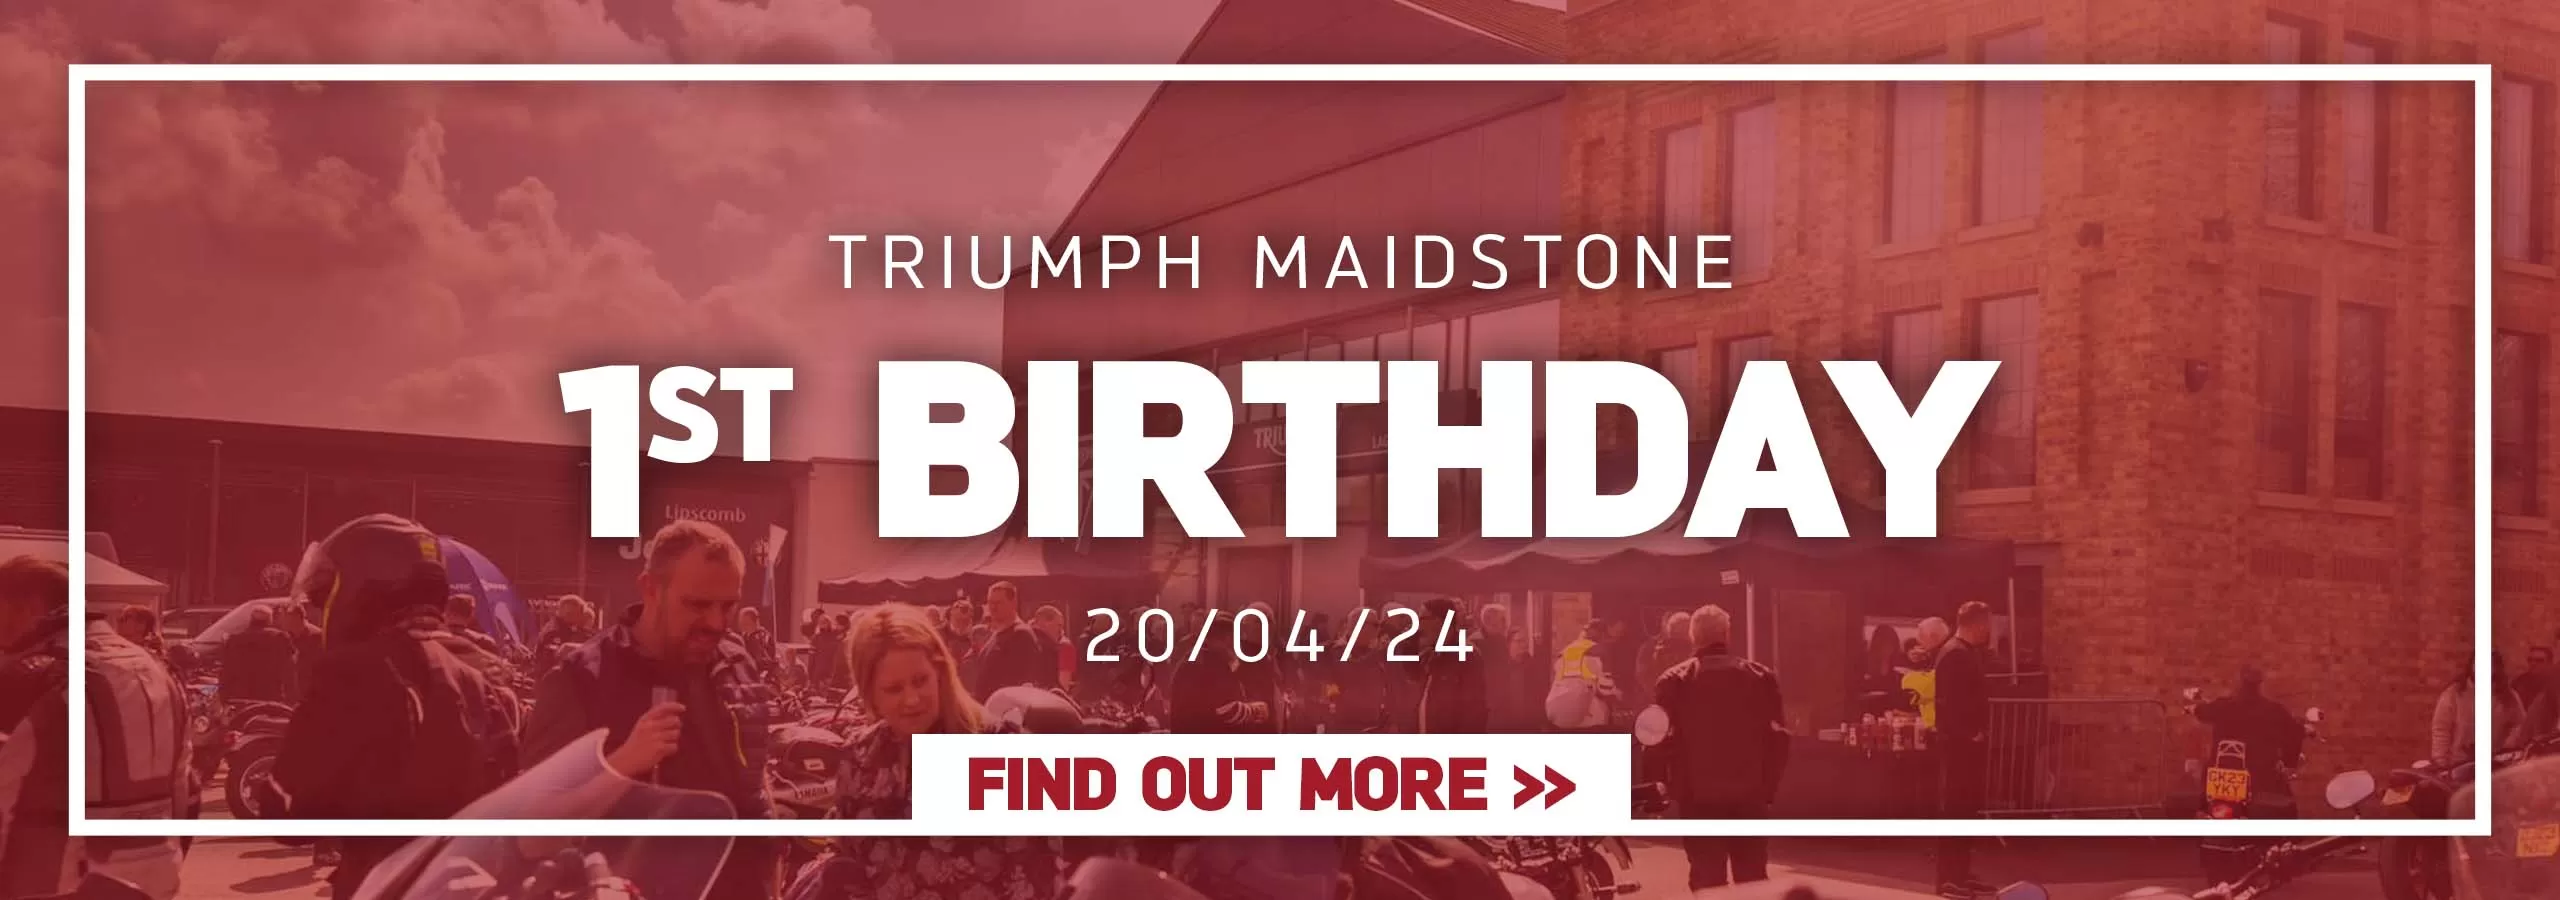 Triumph Maidstone's 1st Birthday